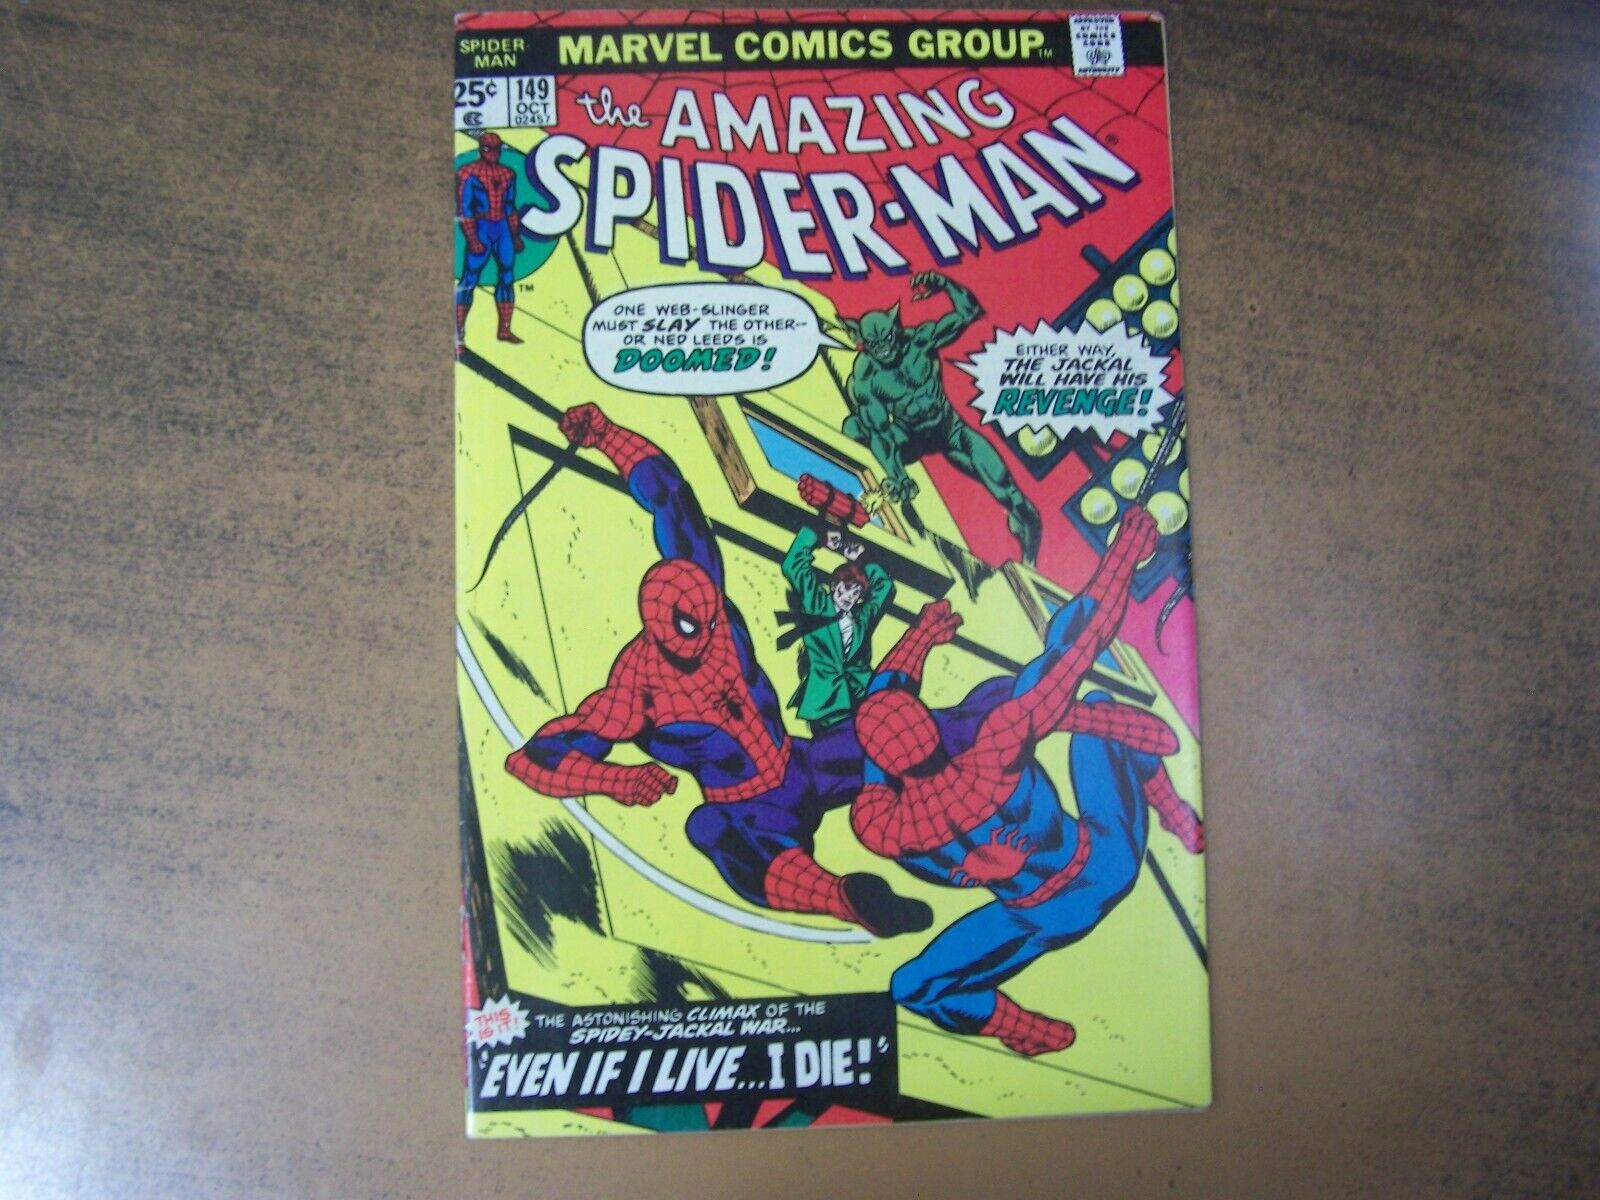 The Amazing Spider-man #149